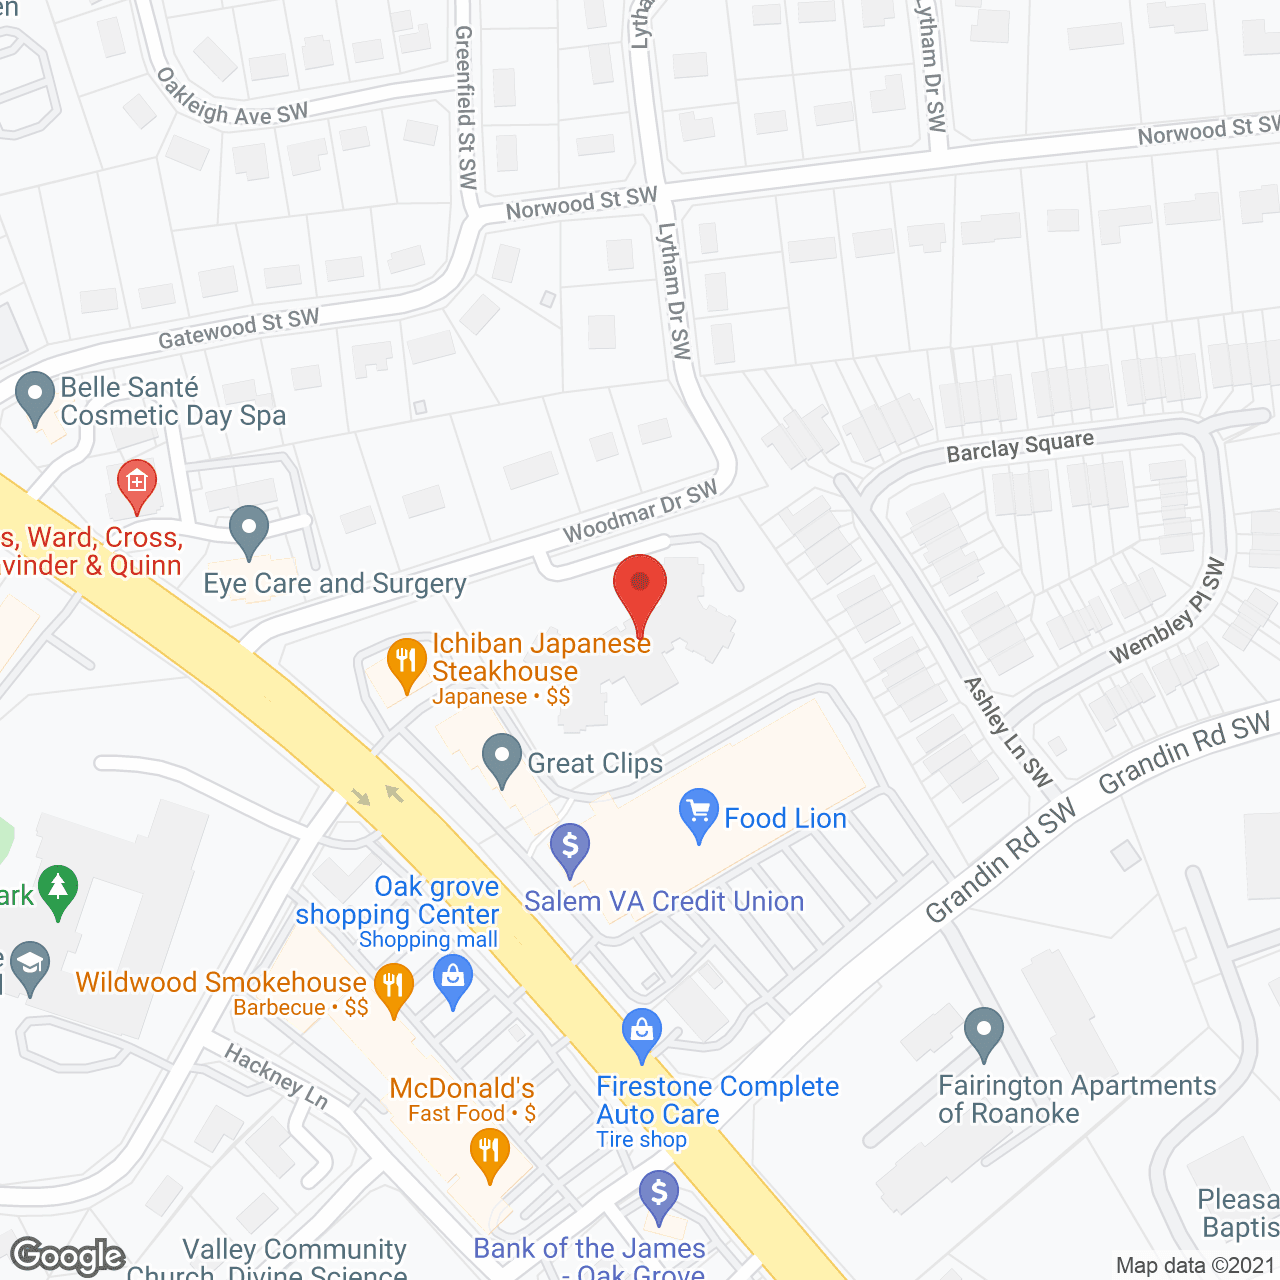 The Park Oak Grove in google map